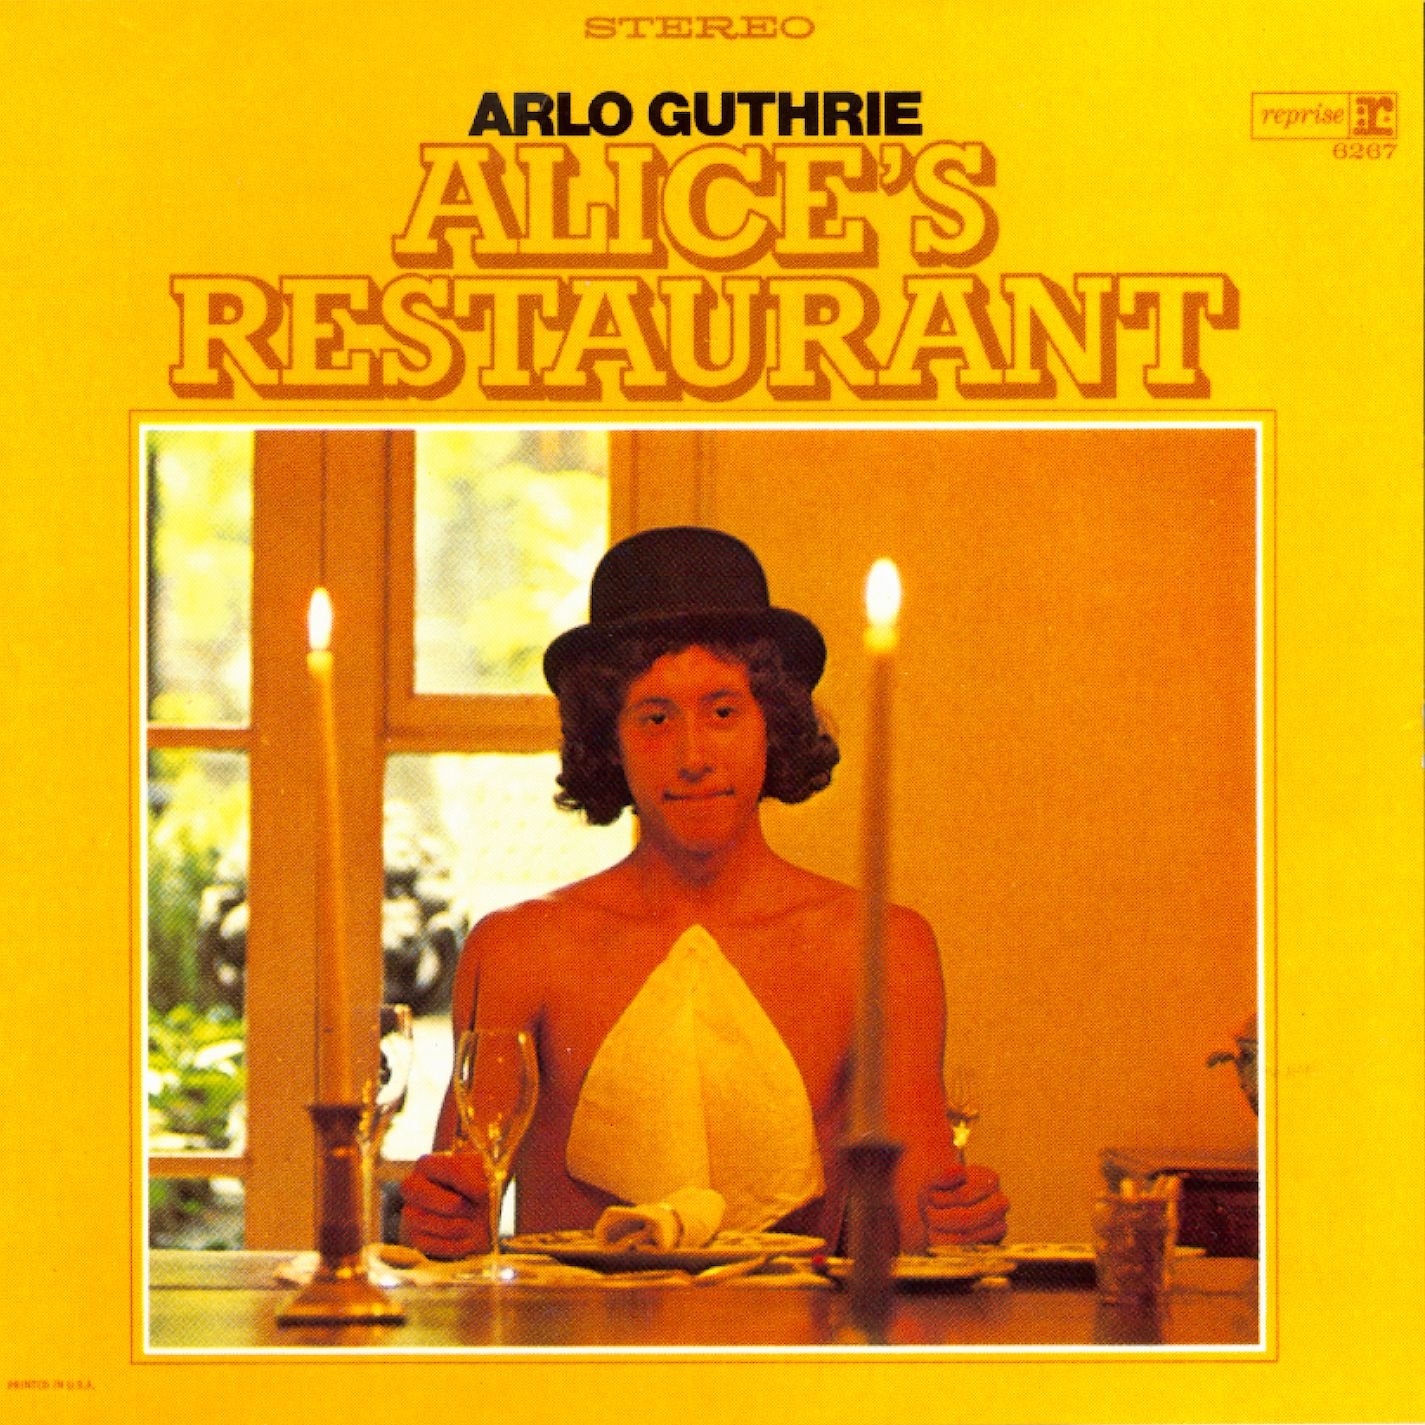 Happy 75th birthday Arlo Guthrie! 